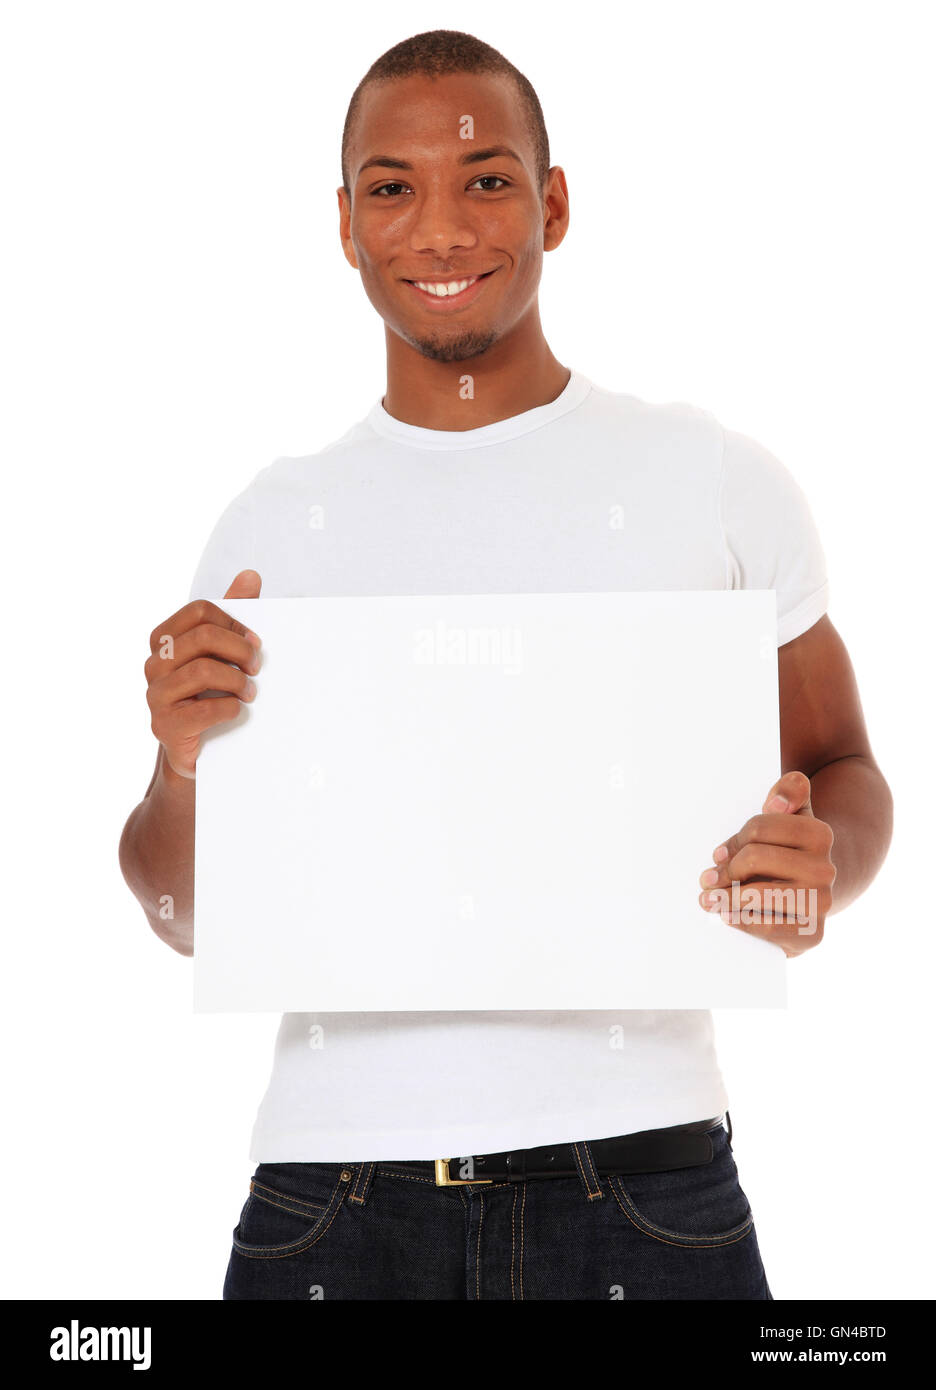 Man holding blank sign Stock Photo